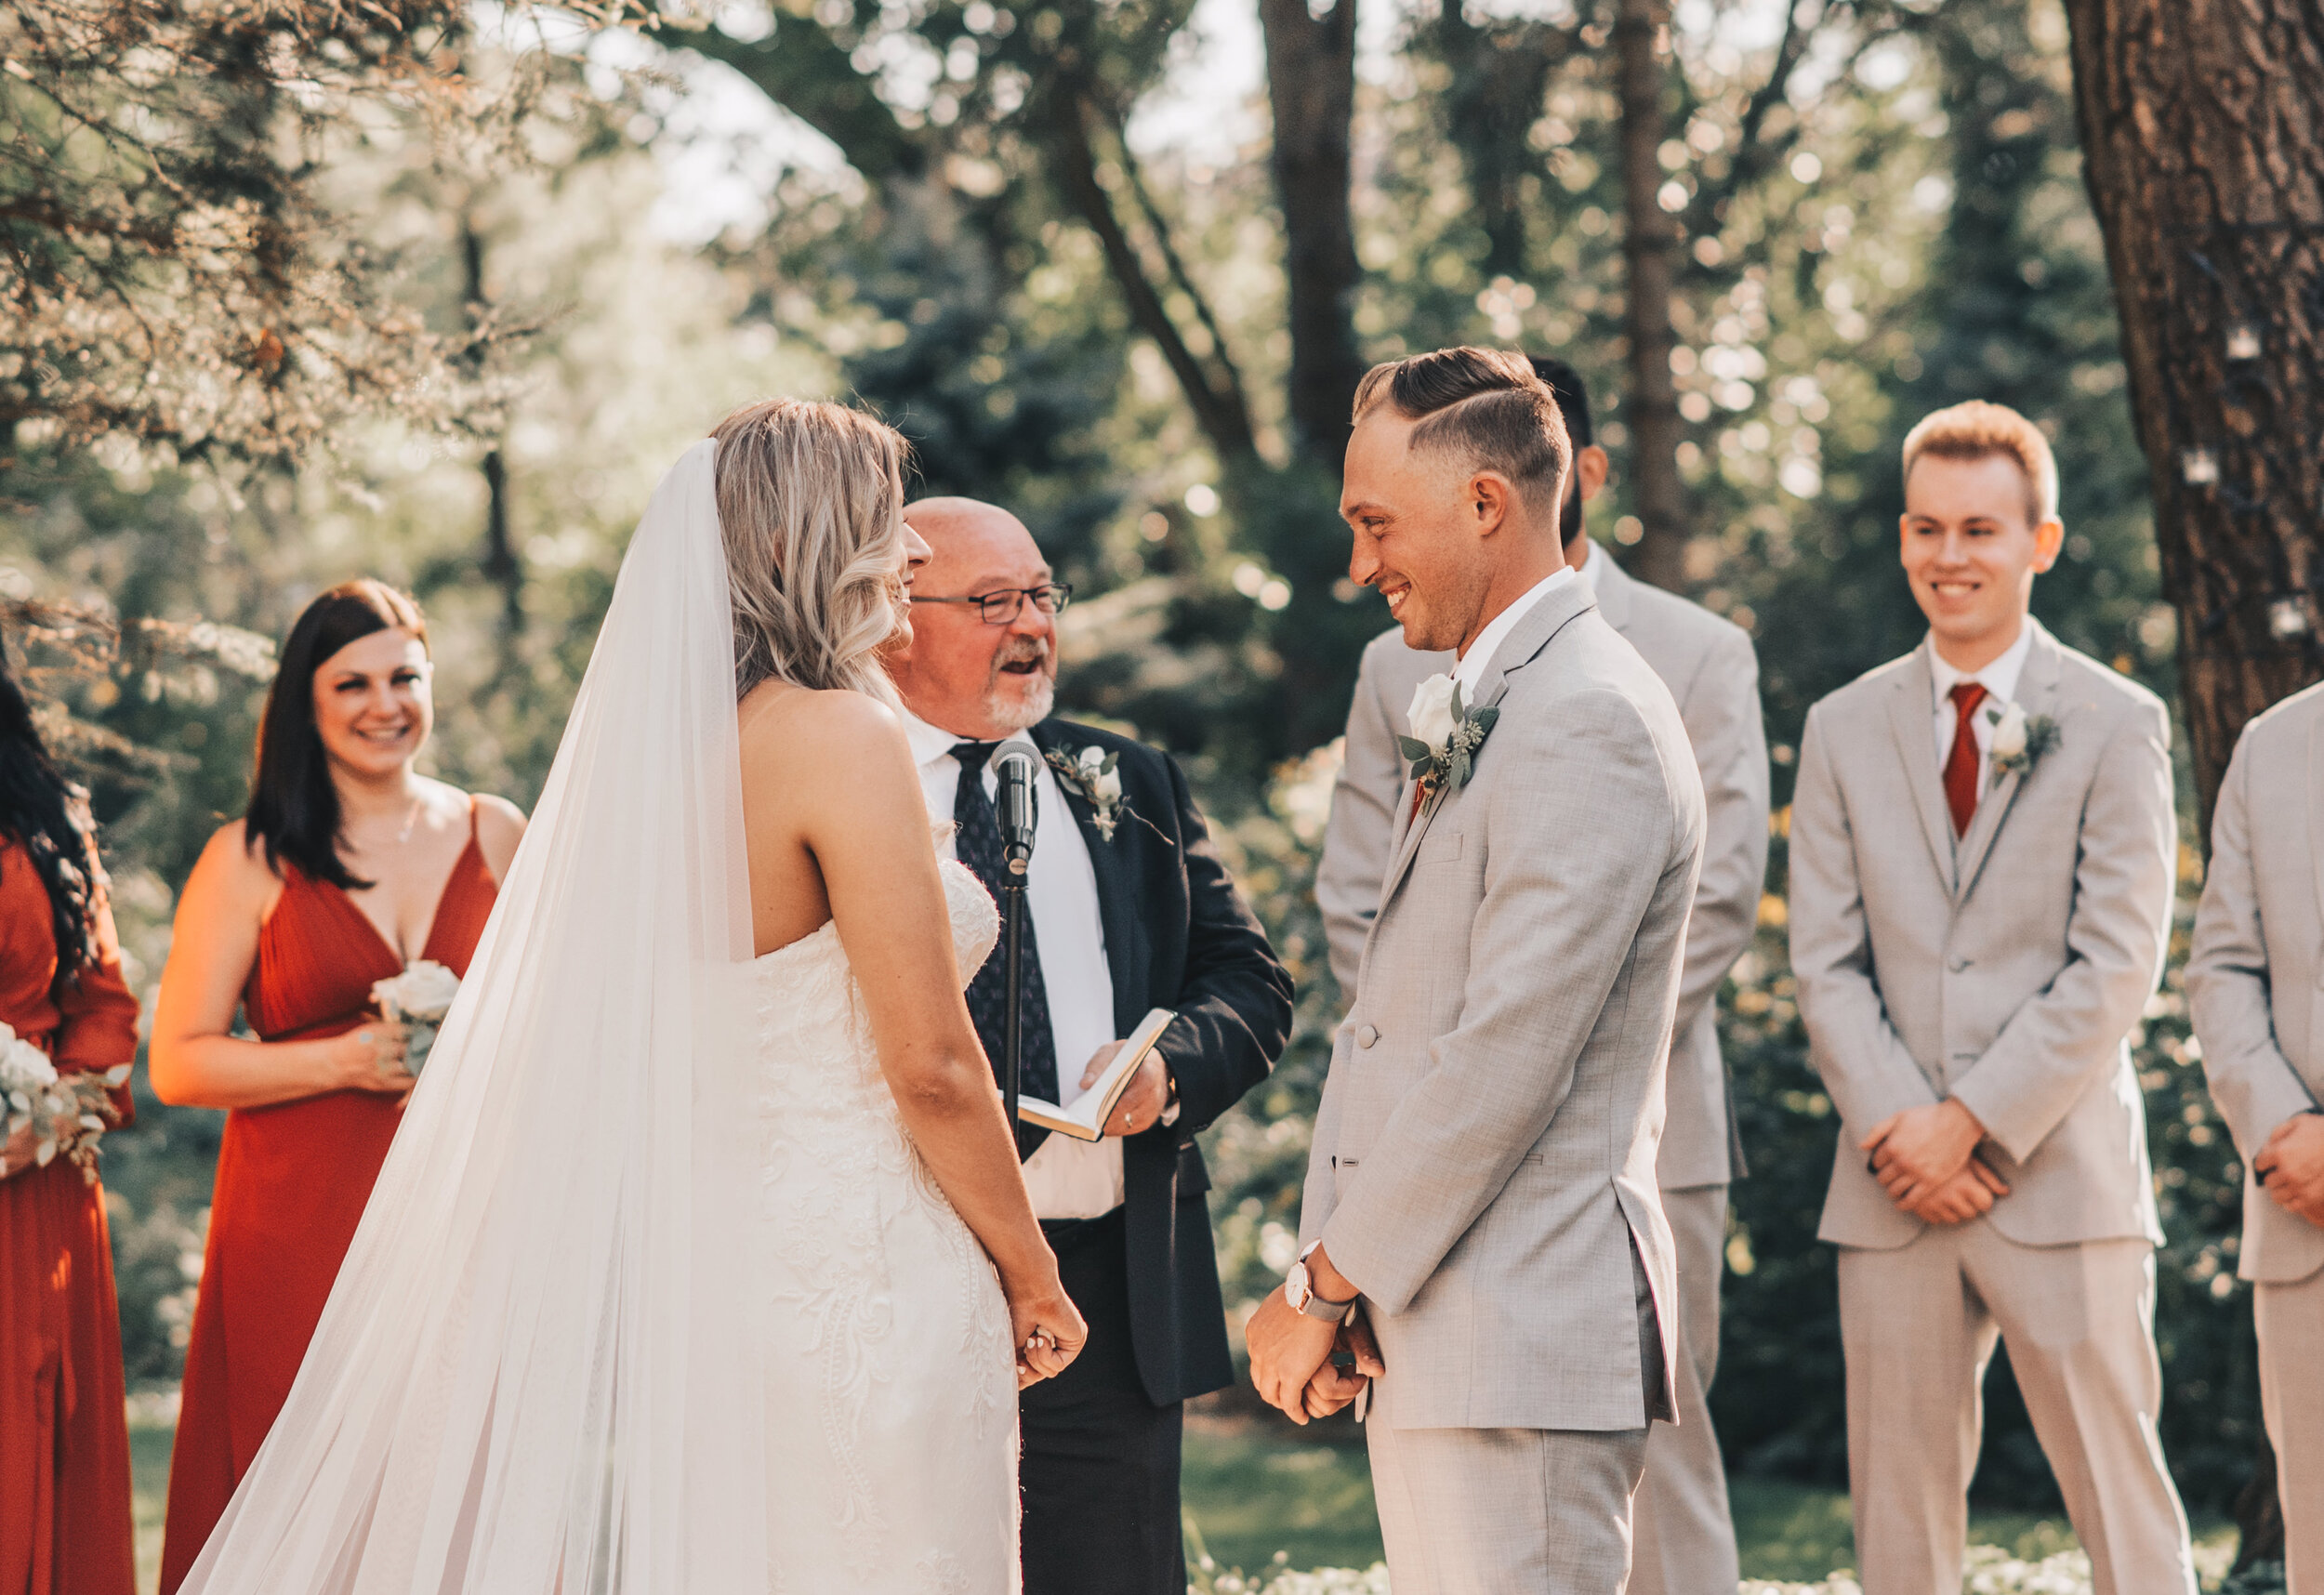 Midwest Backyard Wedding, Intimate Wedding, Outdoor Wedding, Illinois Backyard Wedding, Illinois Intimate Wedding Ceremony